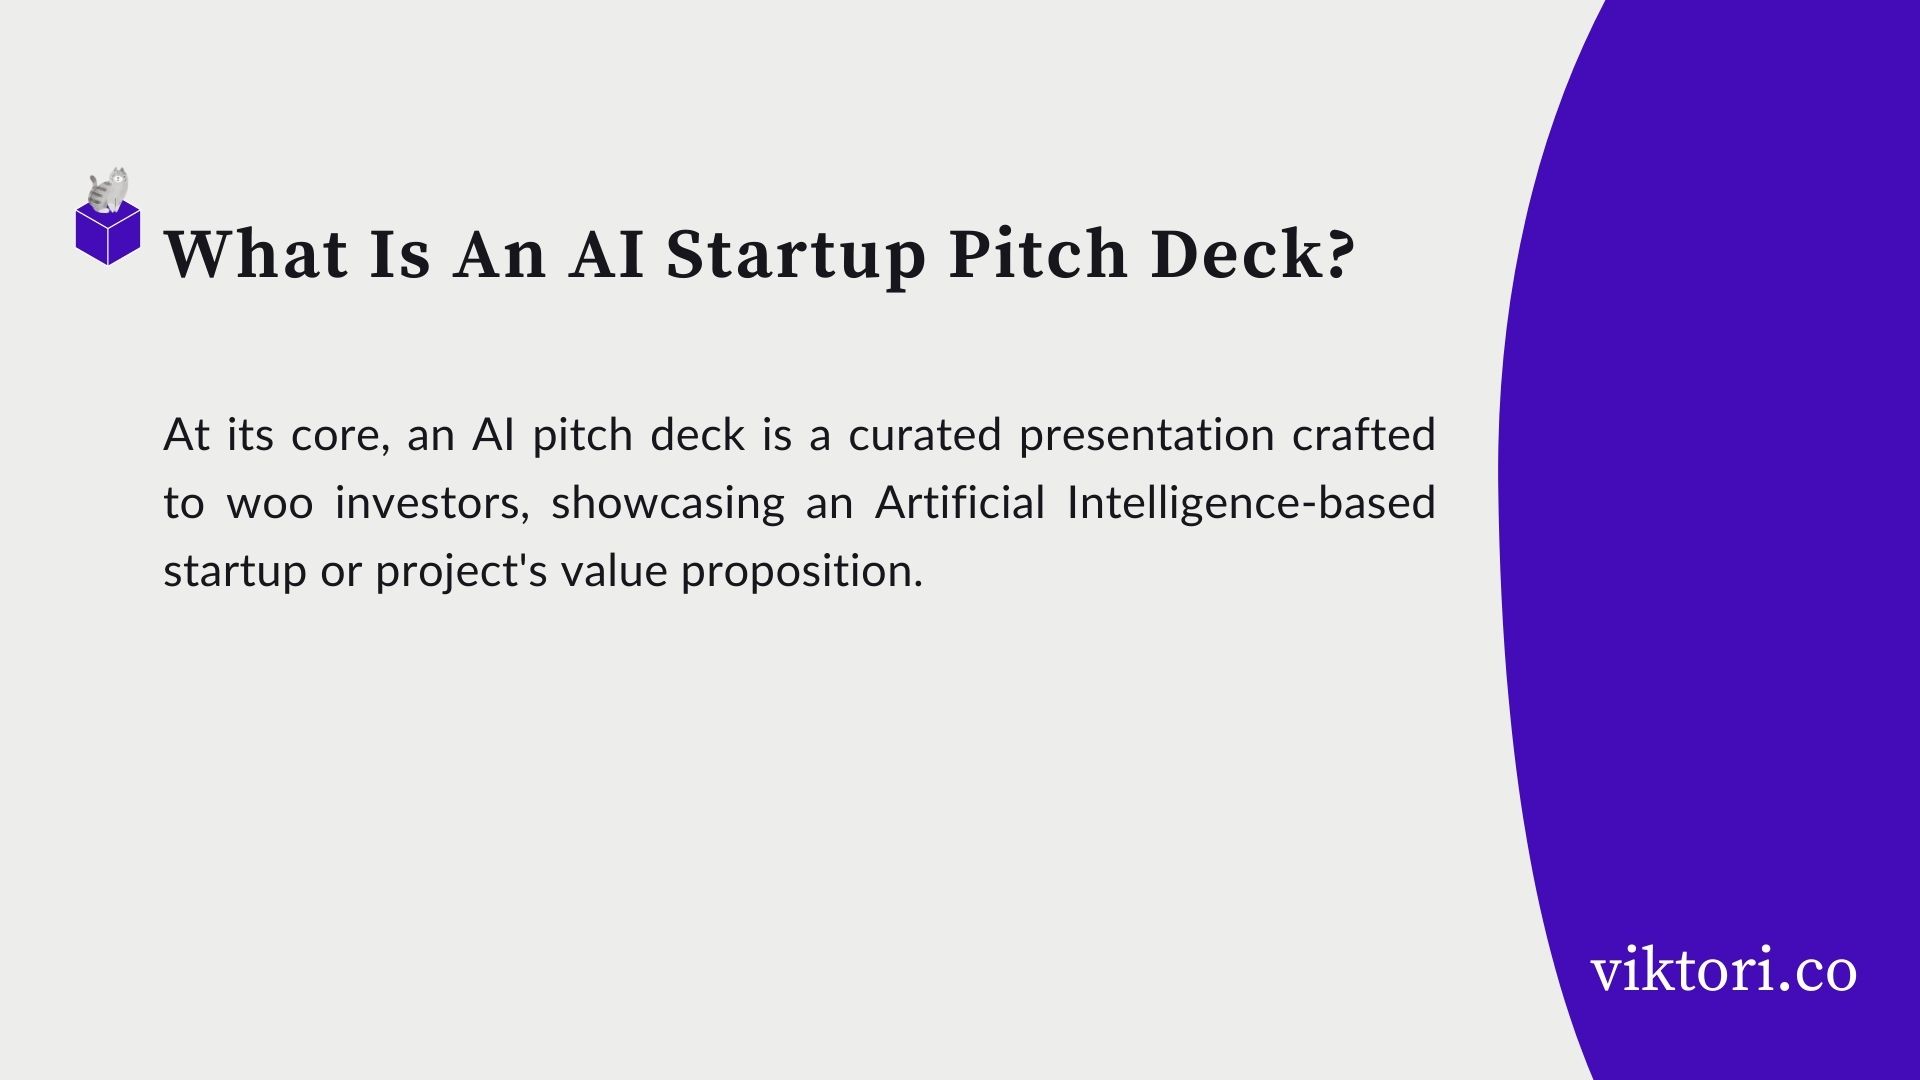 ai startup pitch deck definition